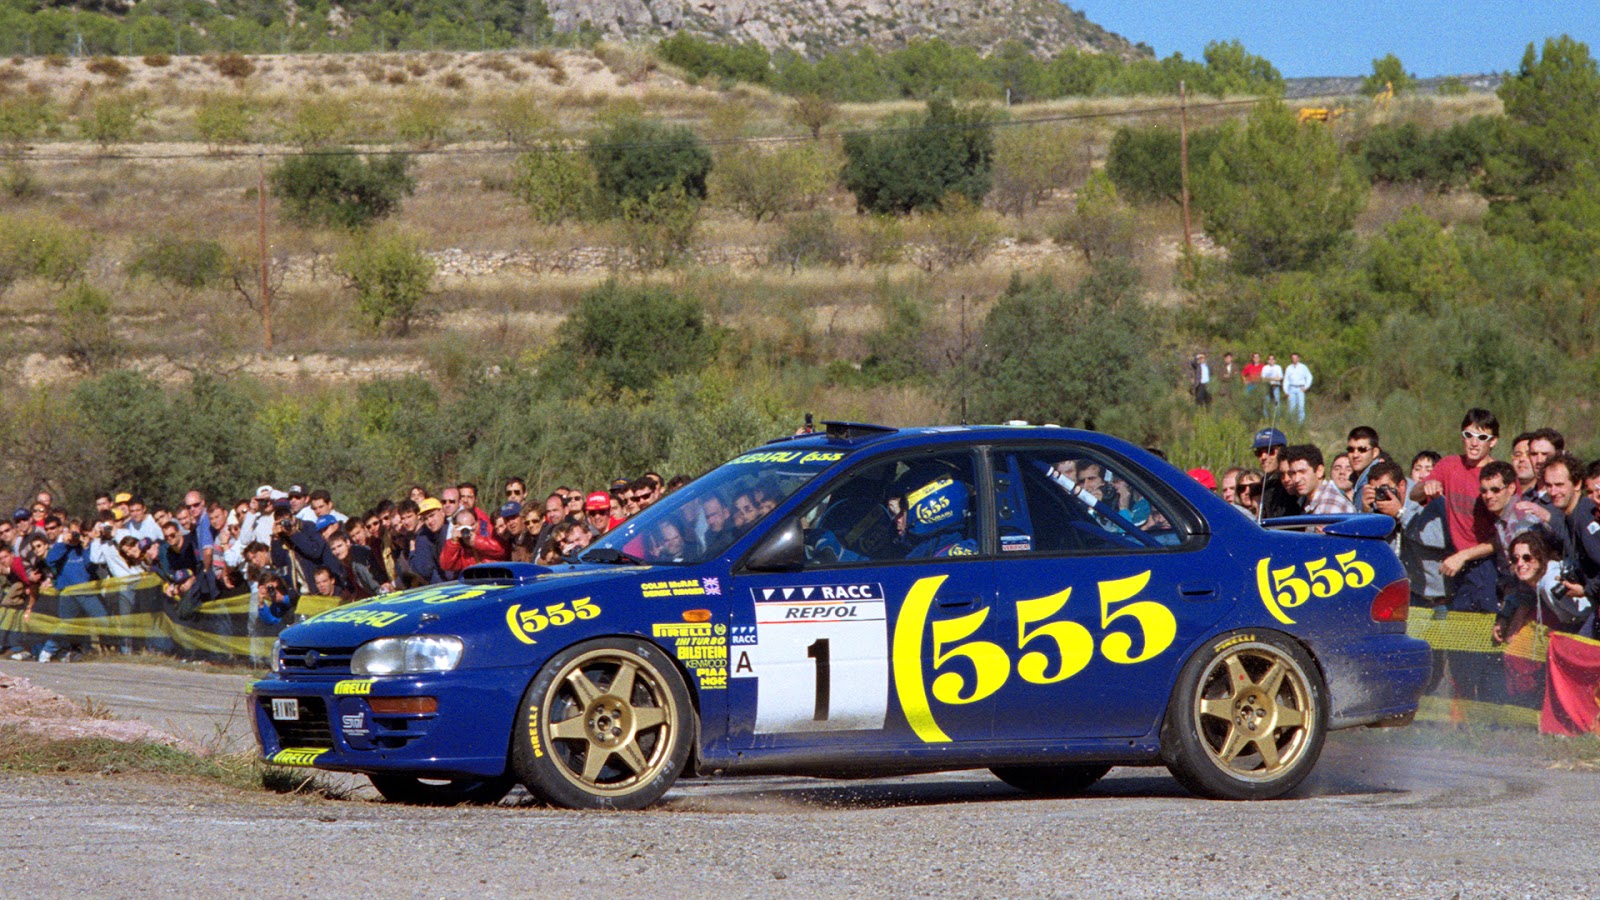 1 Colin MCRAE Derek RINGER Subaru Impreza 555 32 Rally